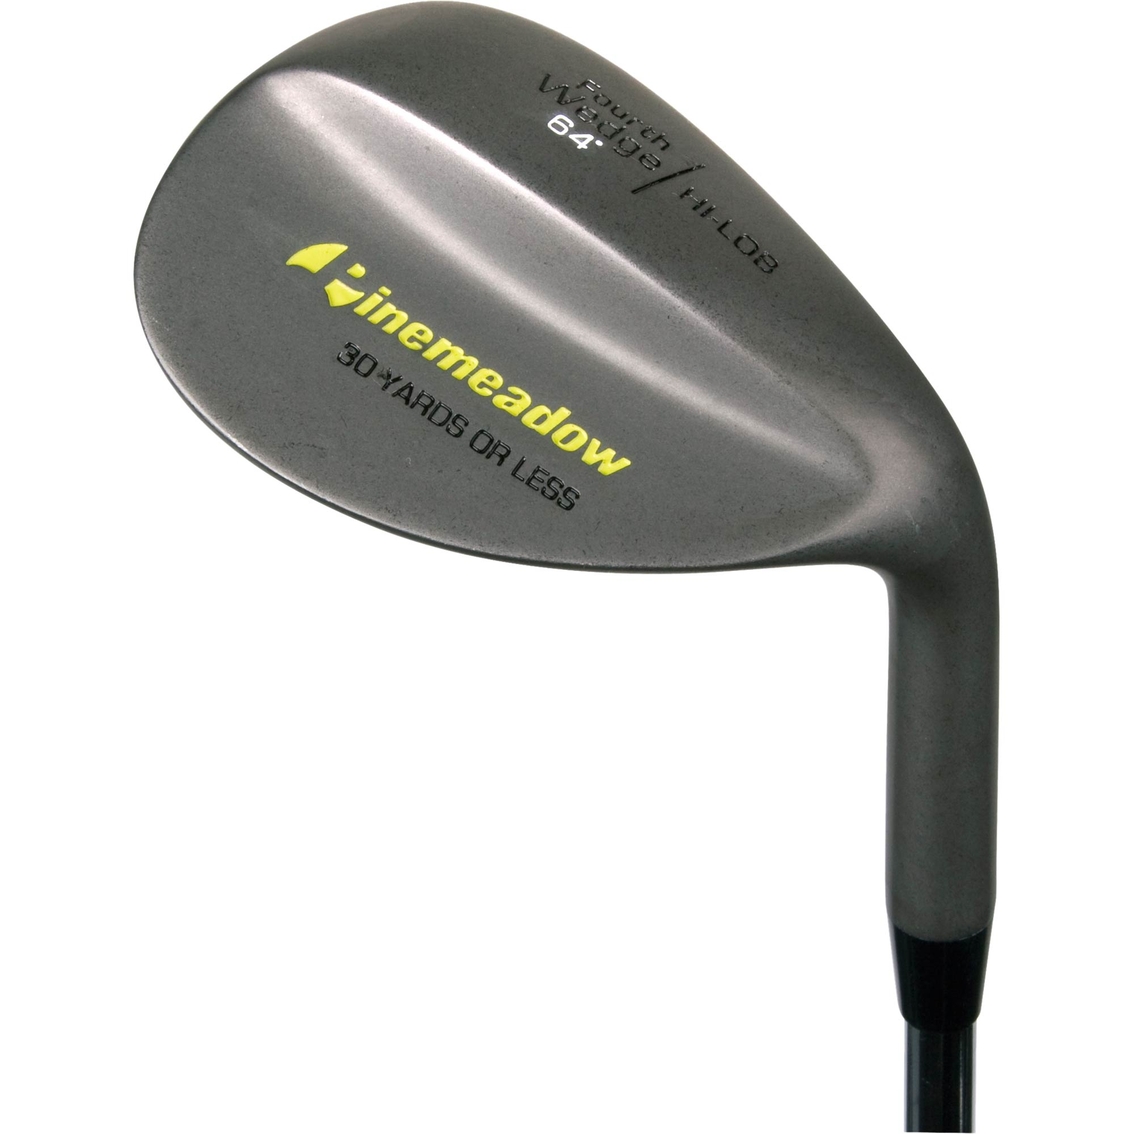 Pinemeadow Golf 64 Degree Wedge